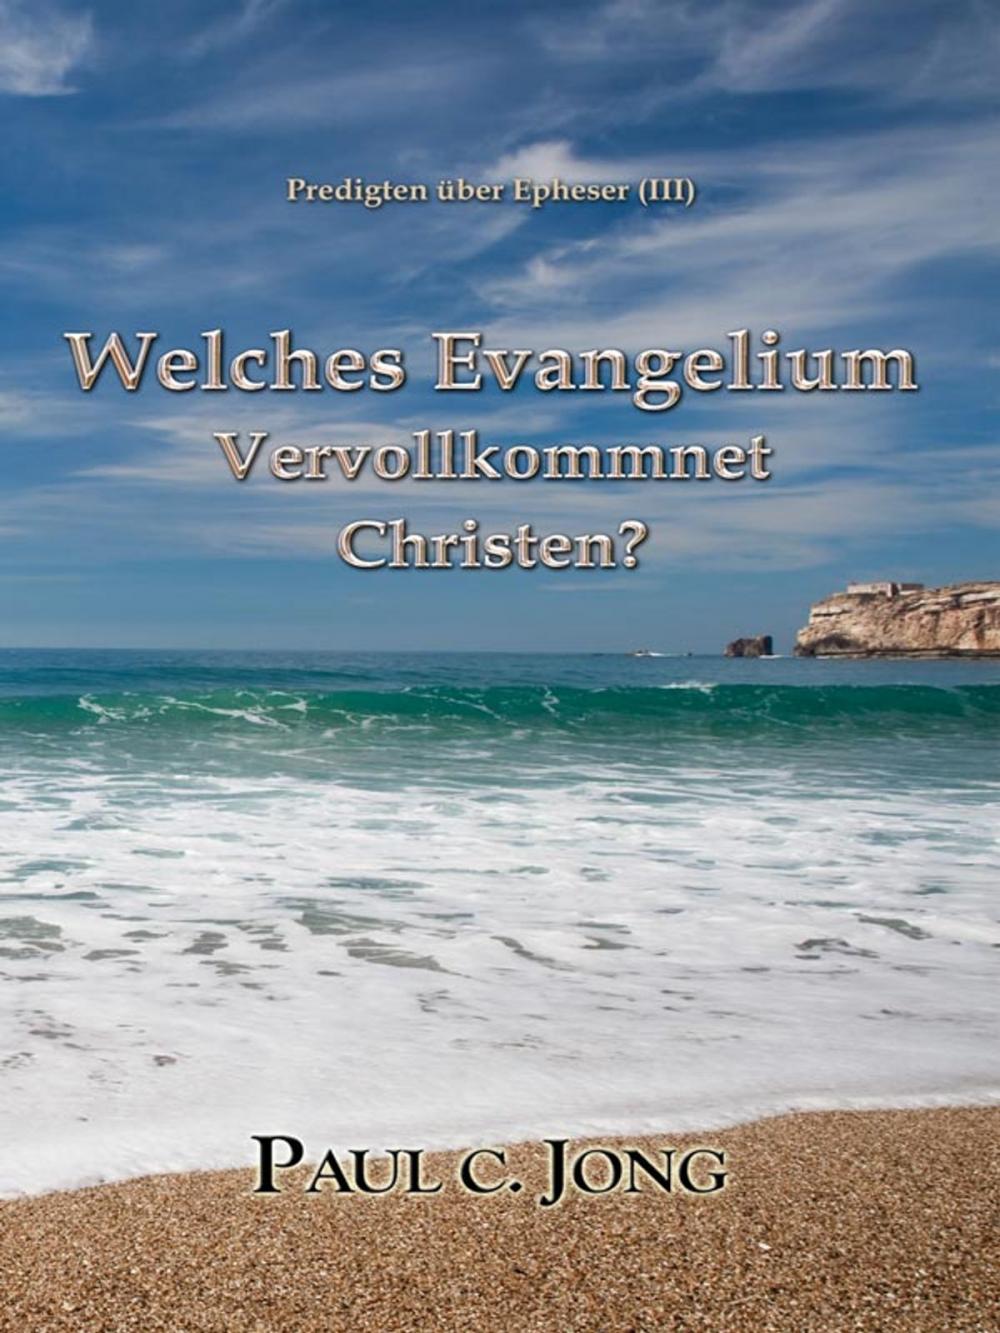 Big bigCover of Welches Evangelium Vervollkommnet Christen? - Predigten über Epheser (III)